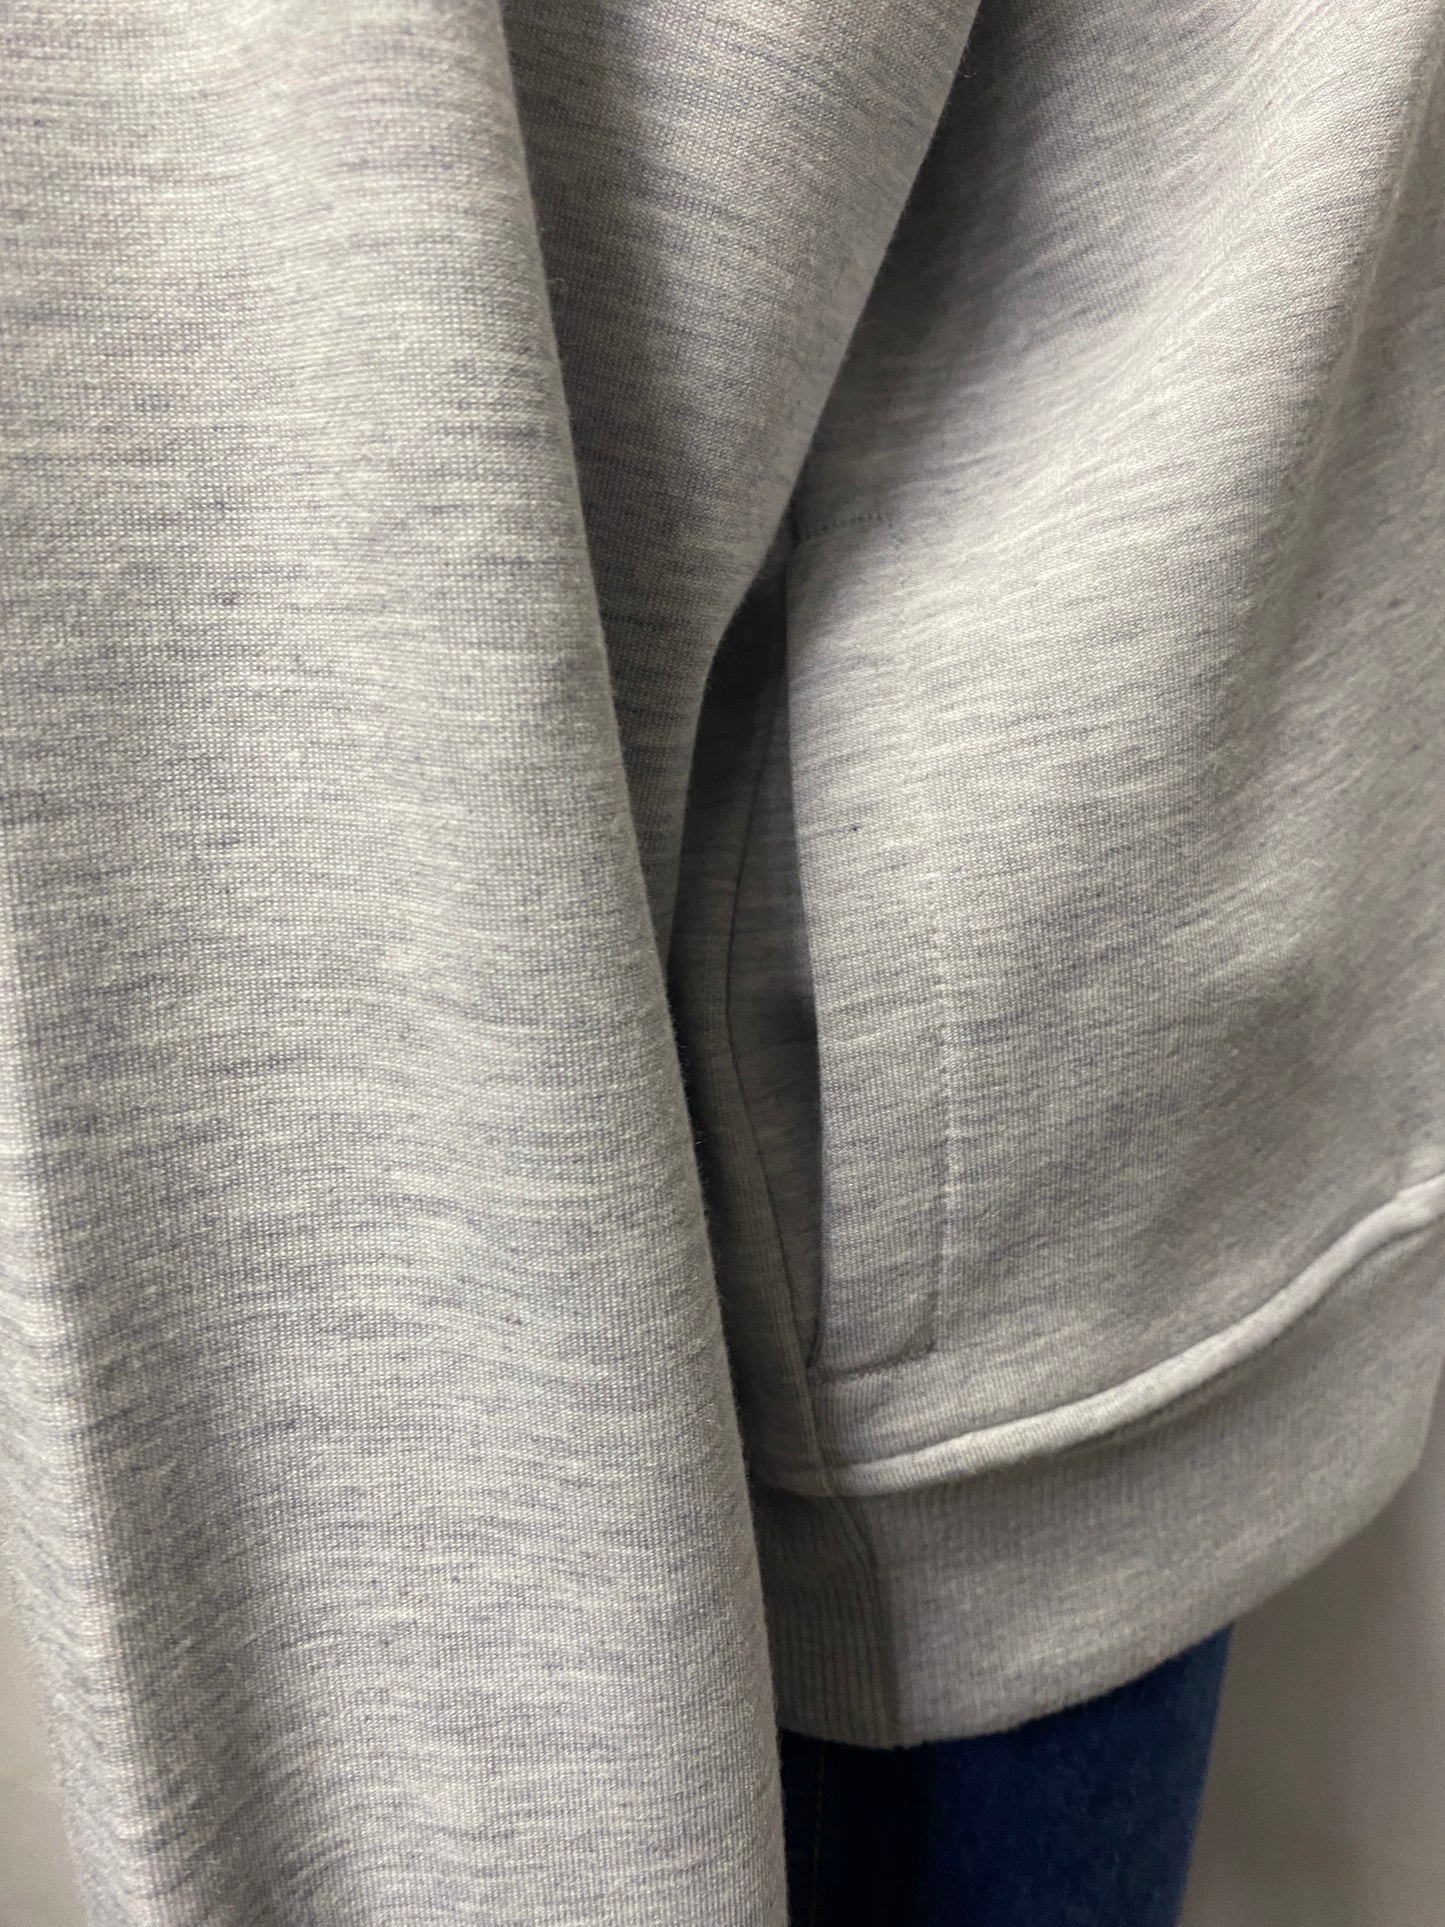 Crew Clothing Company Grey Soft Pull Over Sweatshirt 10 BNWT